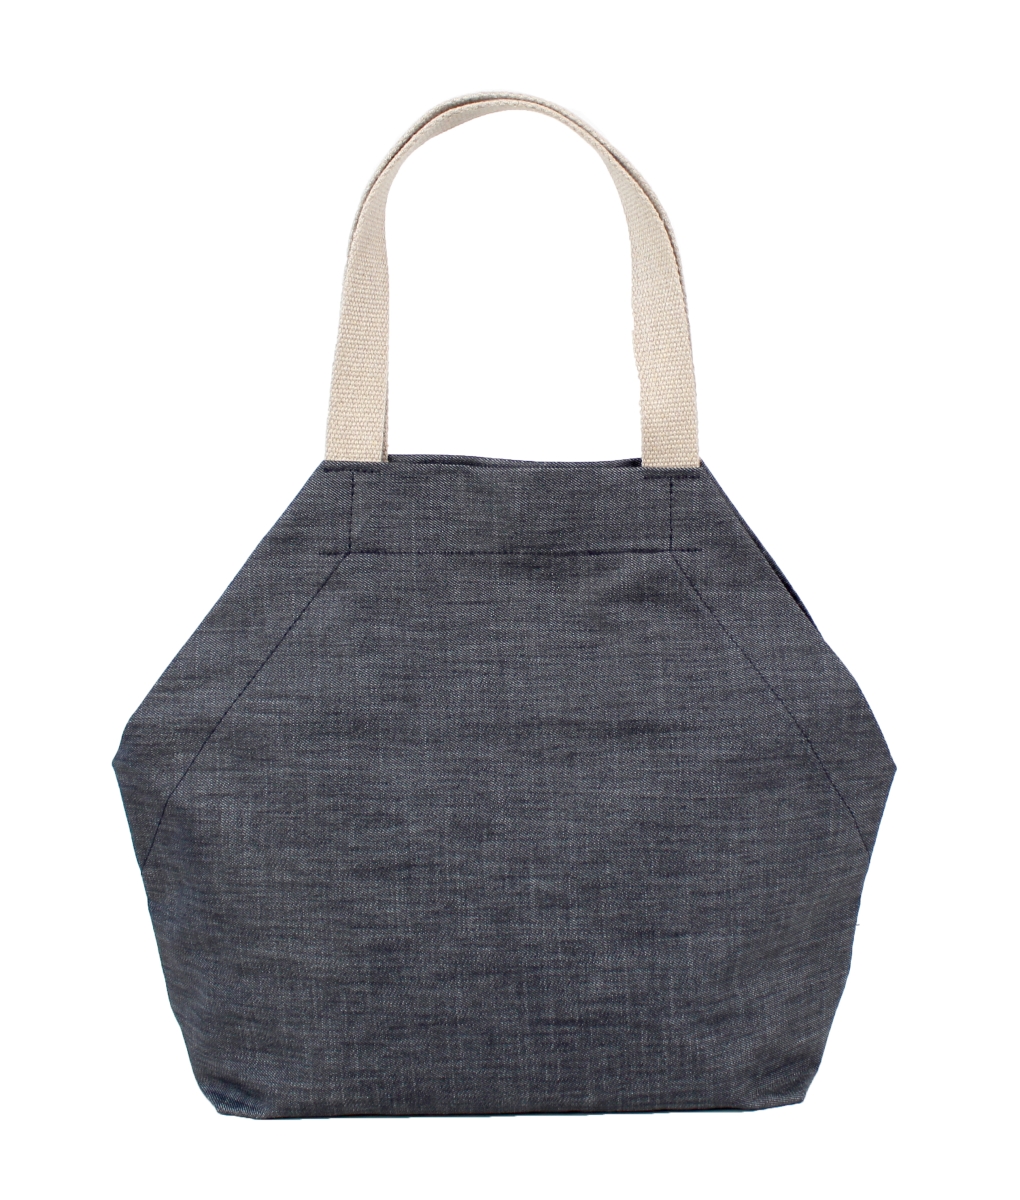 Essential Es002053 Design Bag Handbags